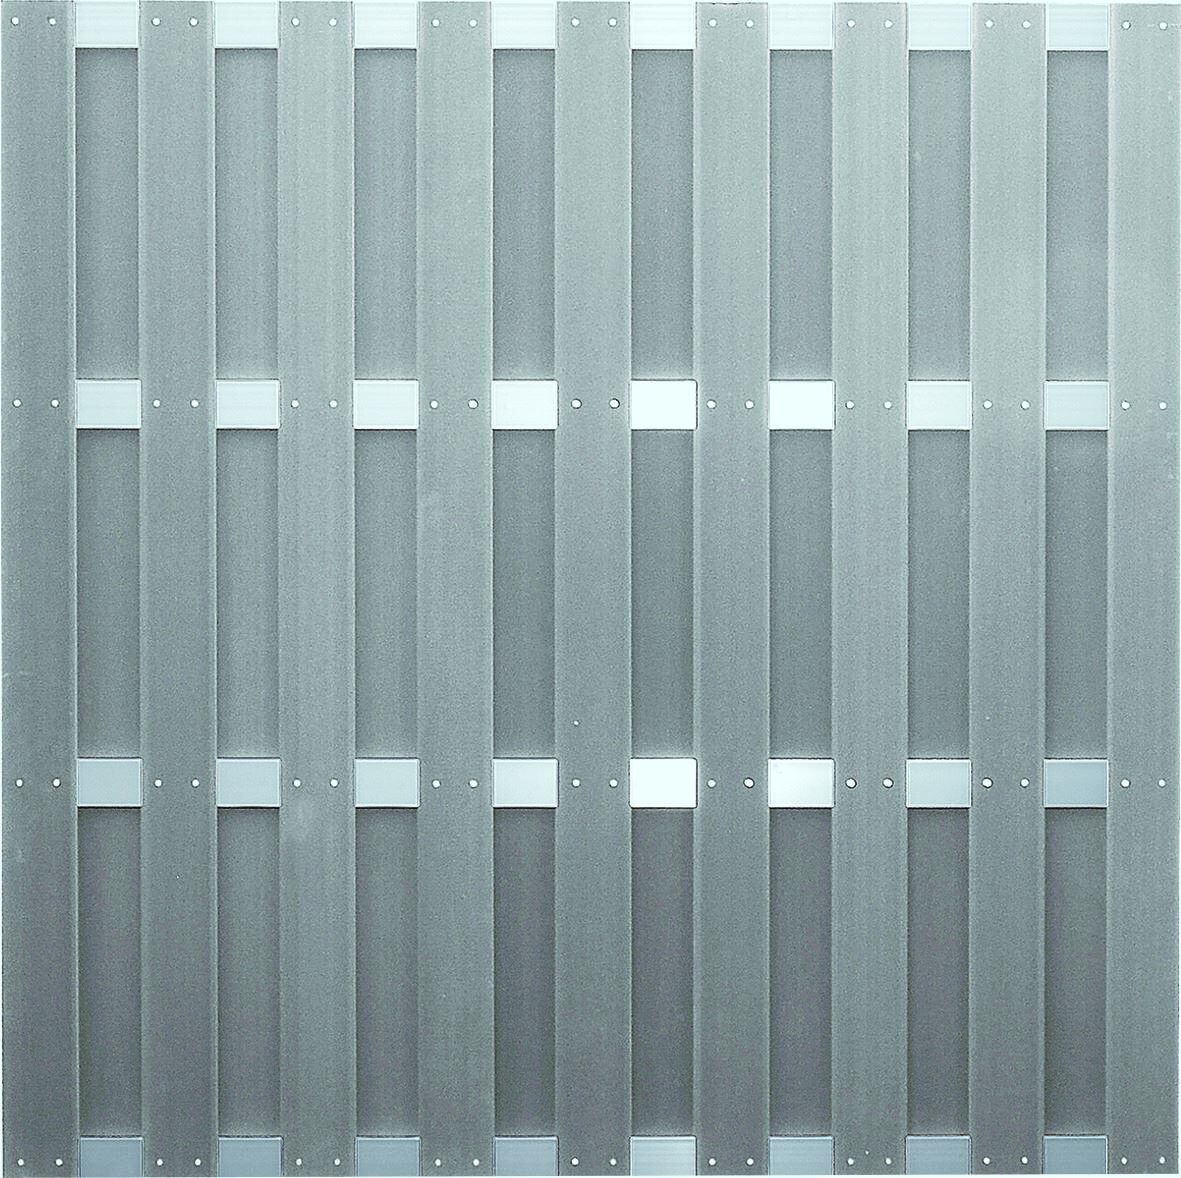 JINAN-Serie grau  180 x 180 cm. WPC-Bretterzaun Querriegel ALU anodisiert #08020190 GY